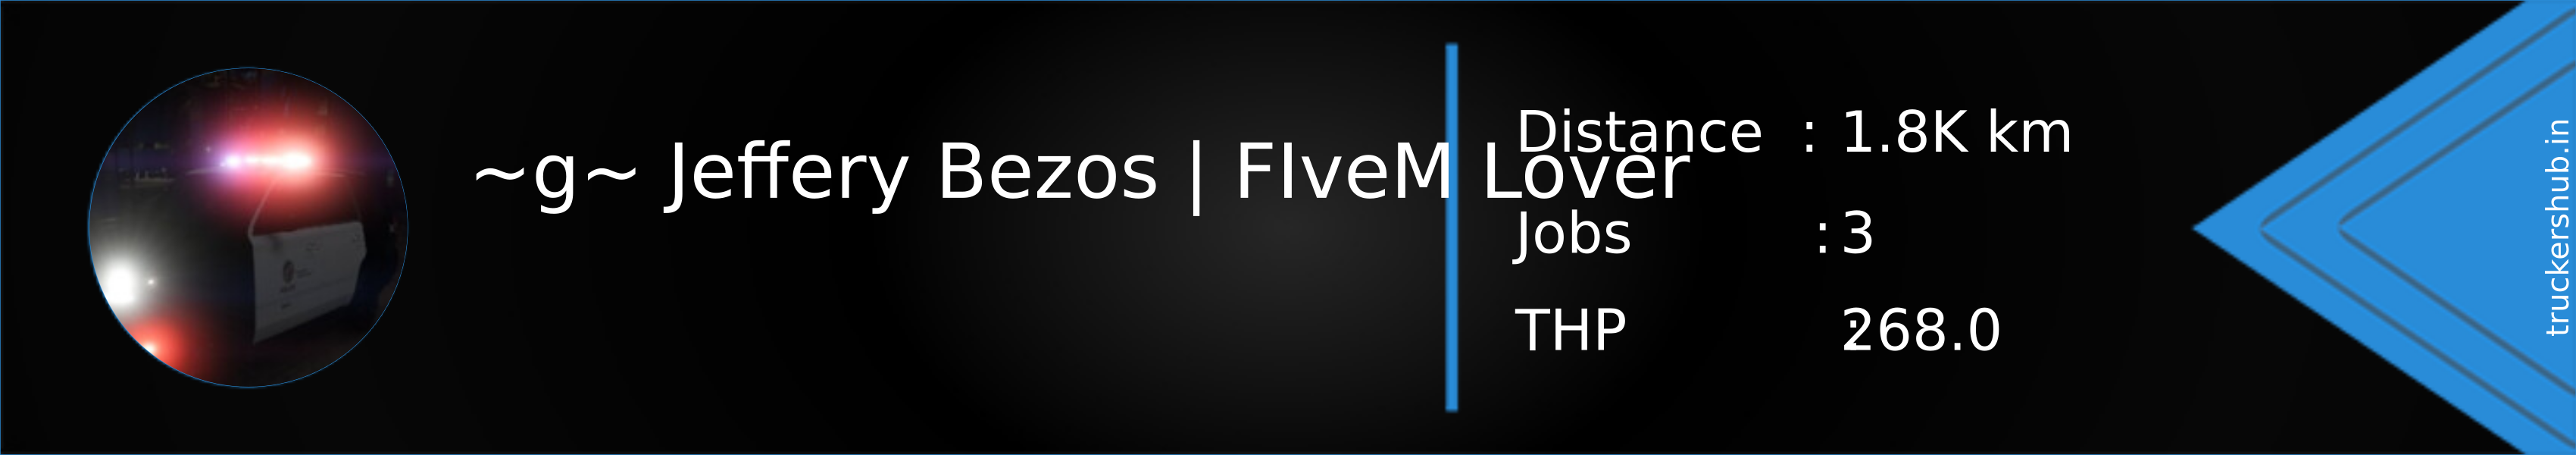 ~g~ Jeffery Bezos | FIveM Lover Banner